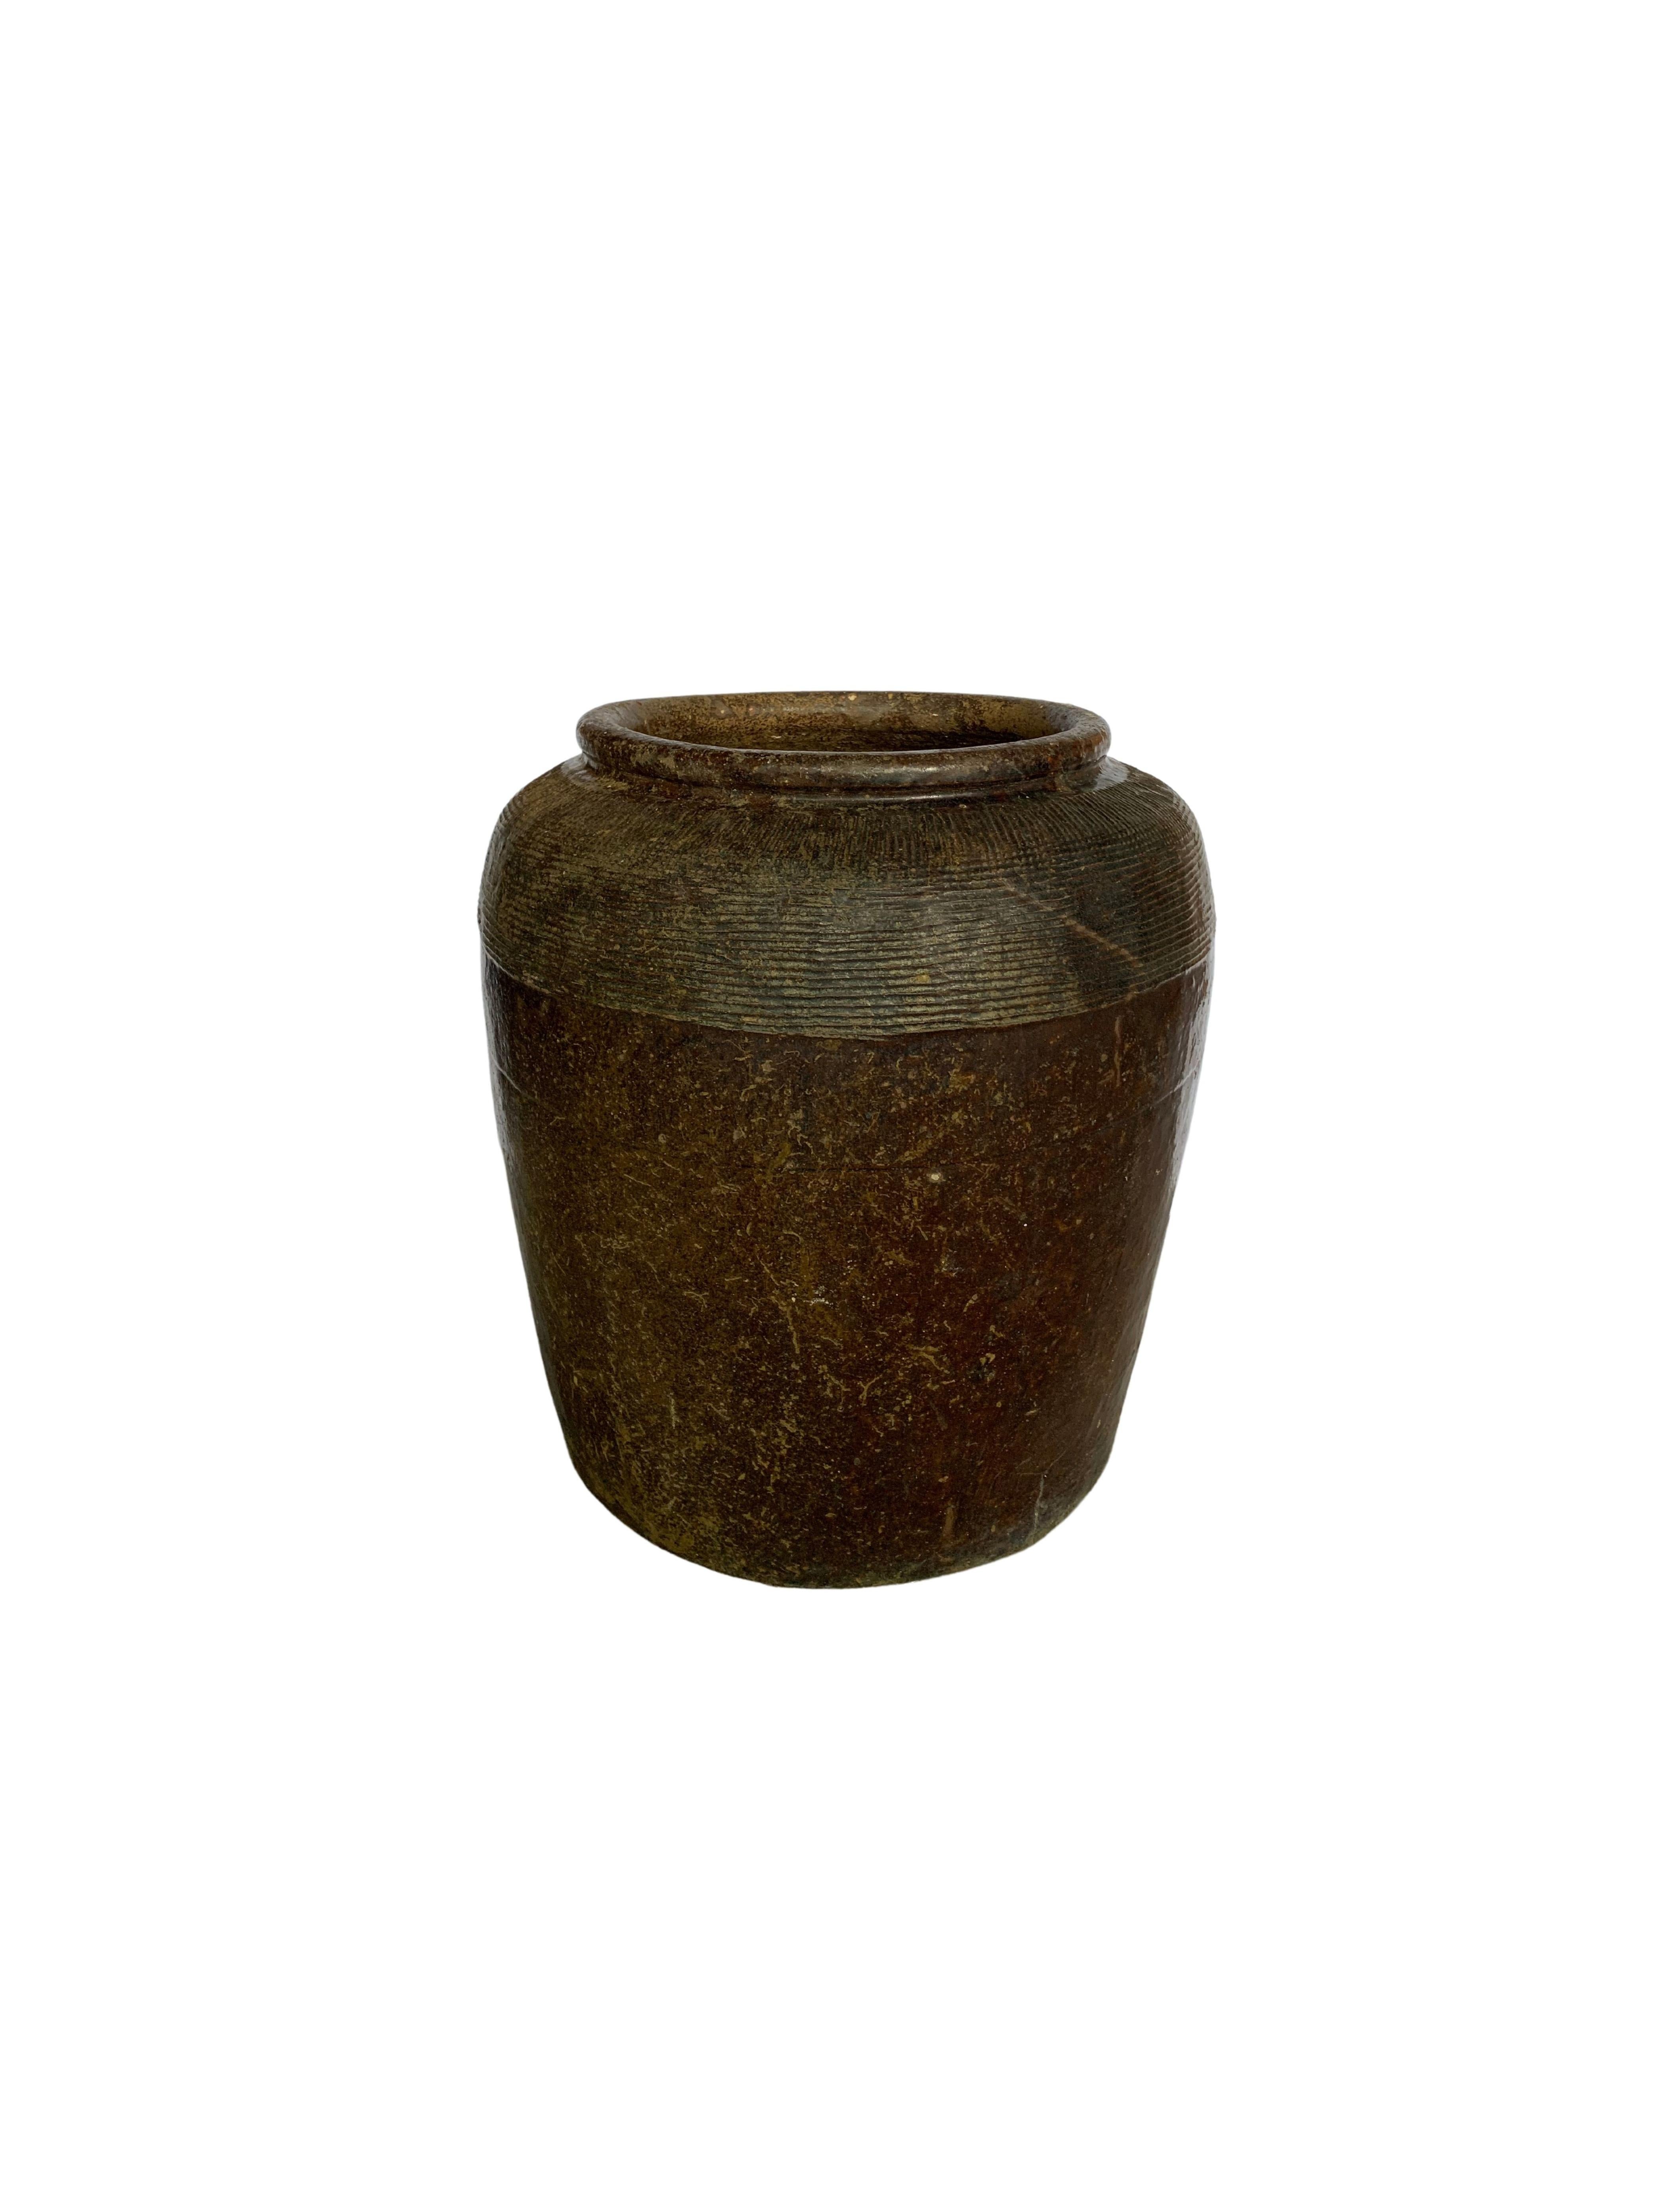 Antique Chinese Brown Glazed Ceramic Salty Egg Jar, c. 1900 For Sale 2